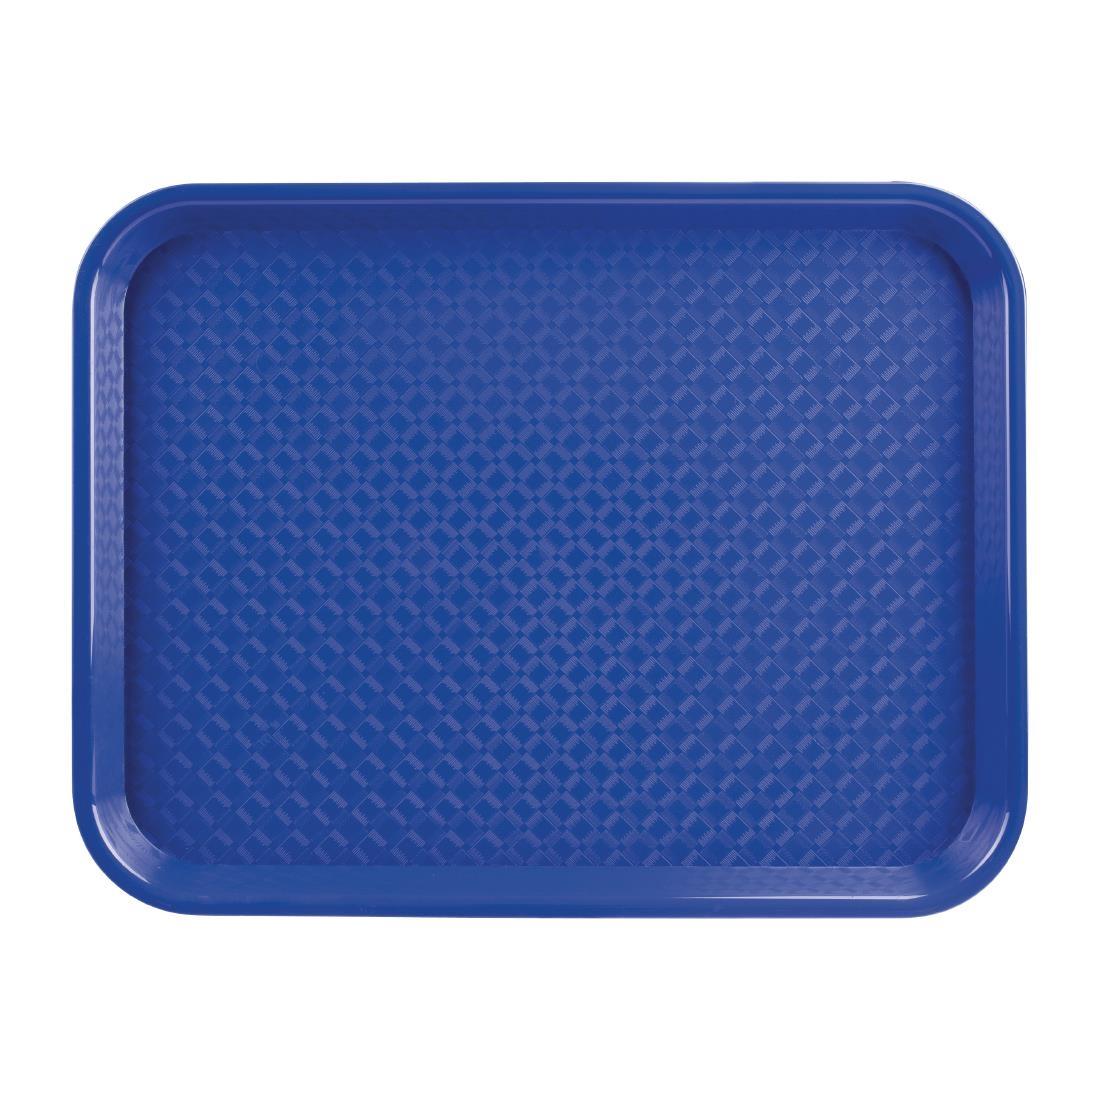 Olympia Kristallon Polypropylene Fast Food Tray Blue Small 345mm - DP215  - 1